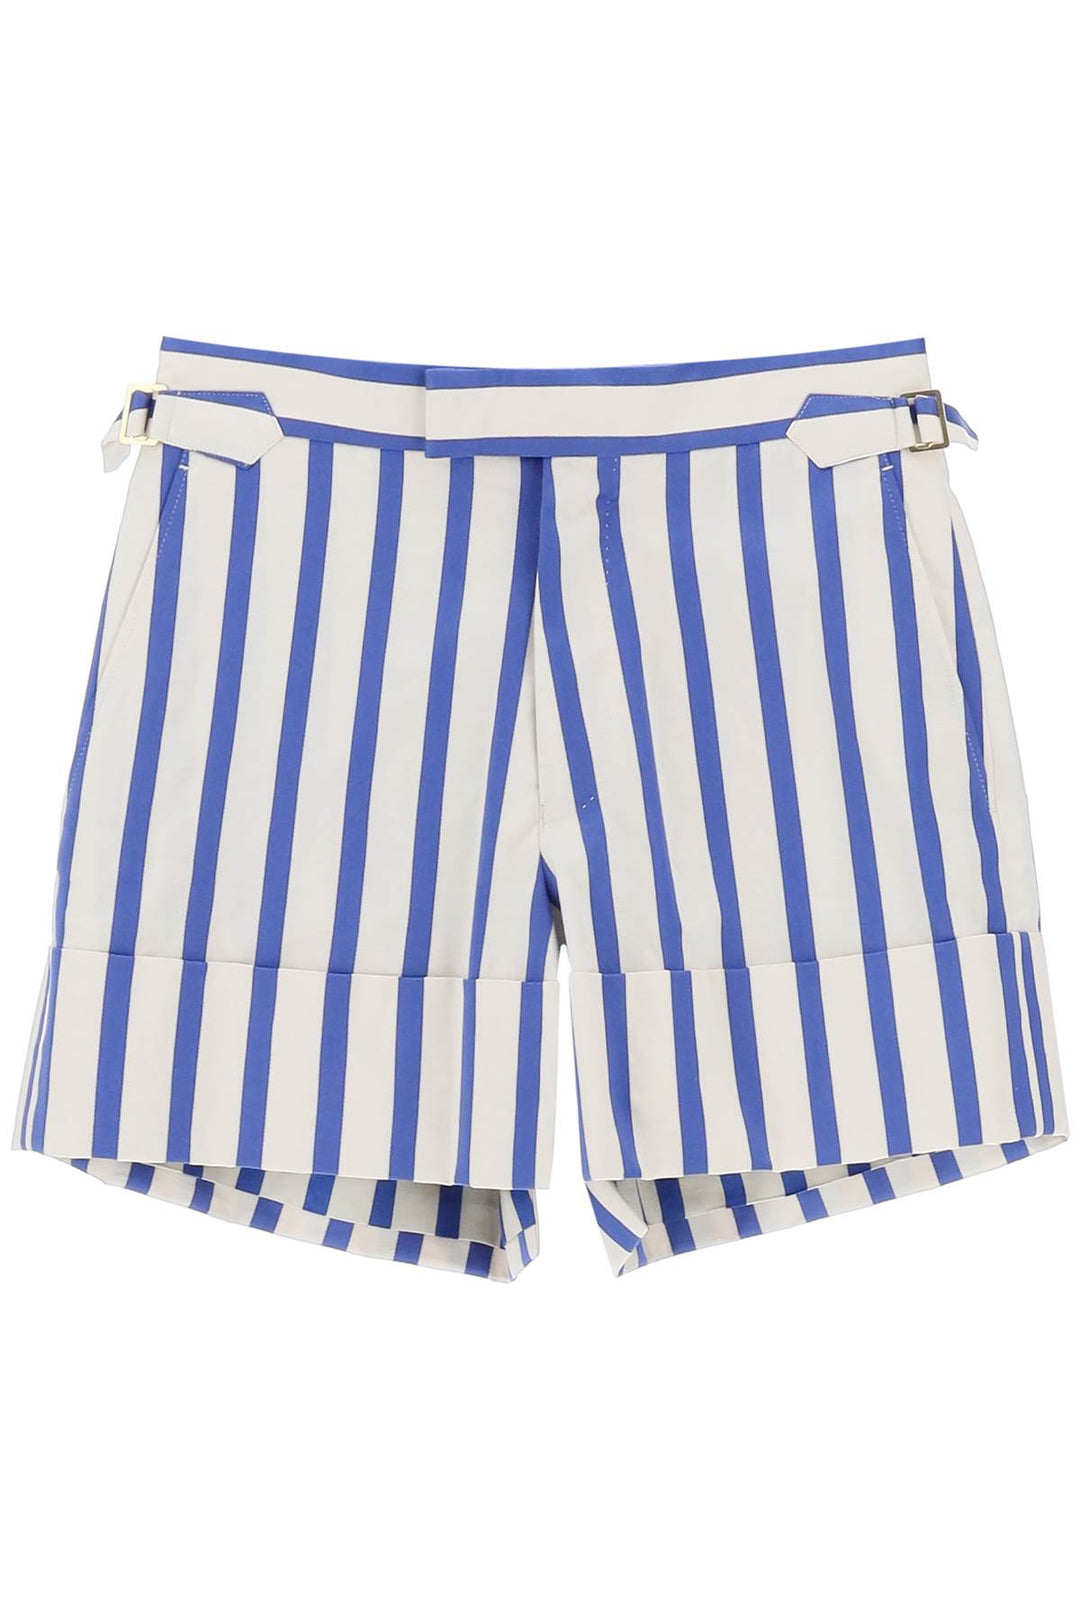 Vivienne Westwood 'Bertram' Striped Shorts   Bianco